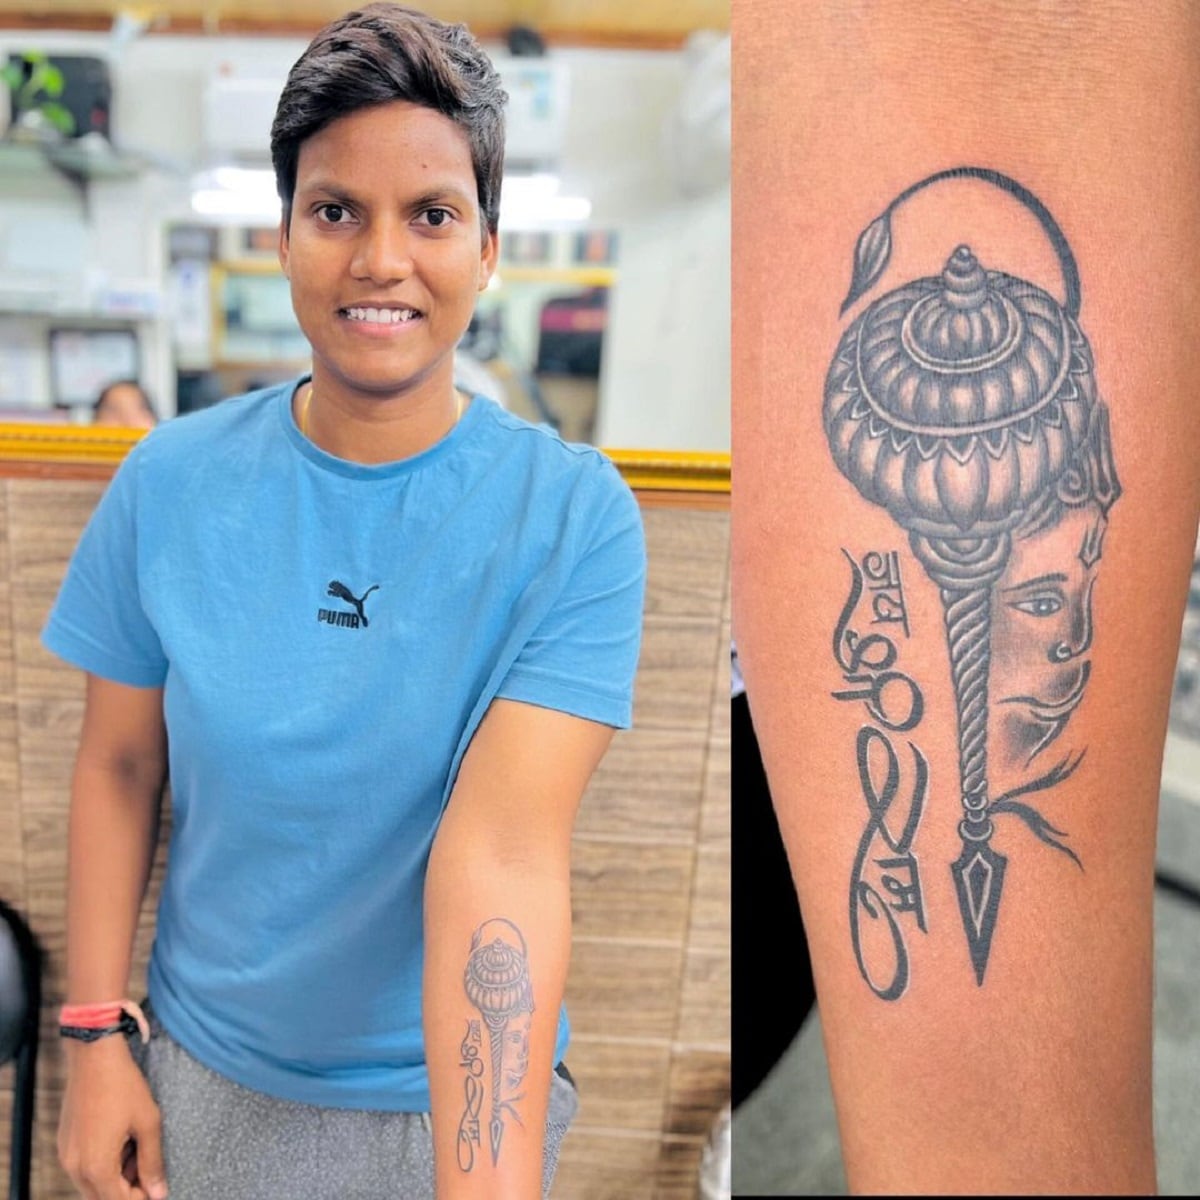 TattooInkFixers on Twitter 𝗟𝗼𝗿𝗱 𝗛𝗮𝗻𝘂𝗺𝗮𝗻 𝘄𝗶𝘁𝗵 𝗛𝗮𝗻𝘂𝗺𝗮𝗻  𝗖𝗵𝗮𝗹𝗶𝘀𝗮 𝗟𝗶𝗻𝗲𝘀 𝗧𝗮𝘁𝘁𝗼𝗼 Article httpstco2thpV7xYud  Hanuman LordHanuman LordHanumanTattoo Tattoo TattooArt LatestTattoo  TattooDesign 2019Tattoo 